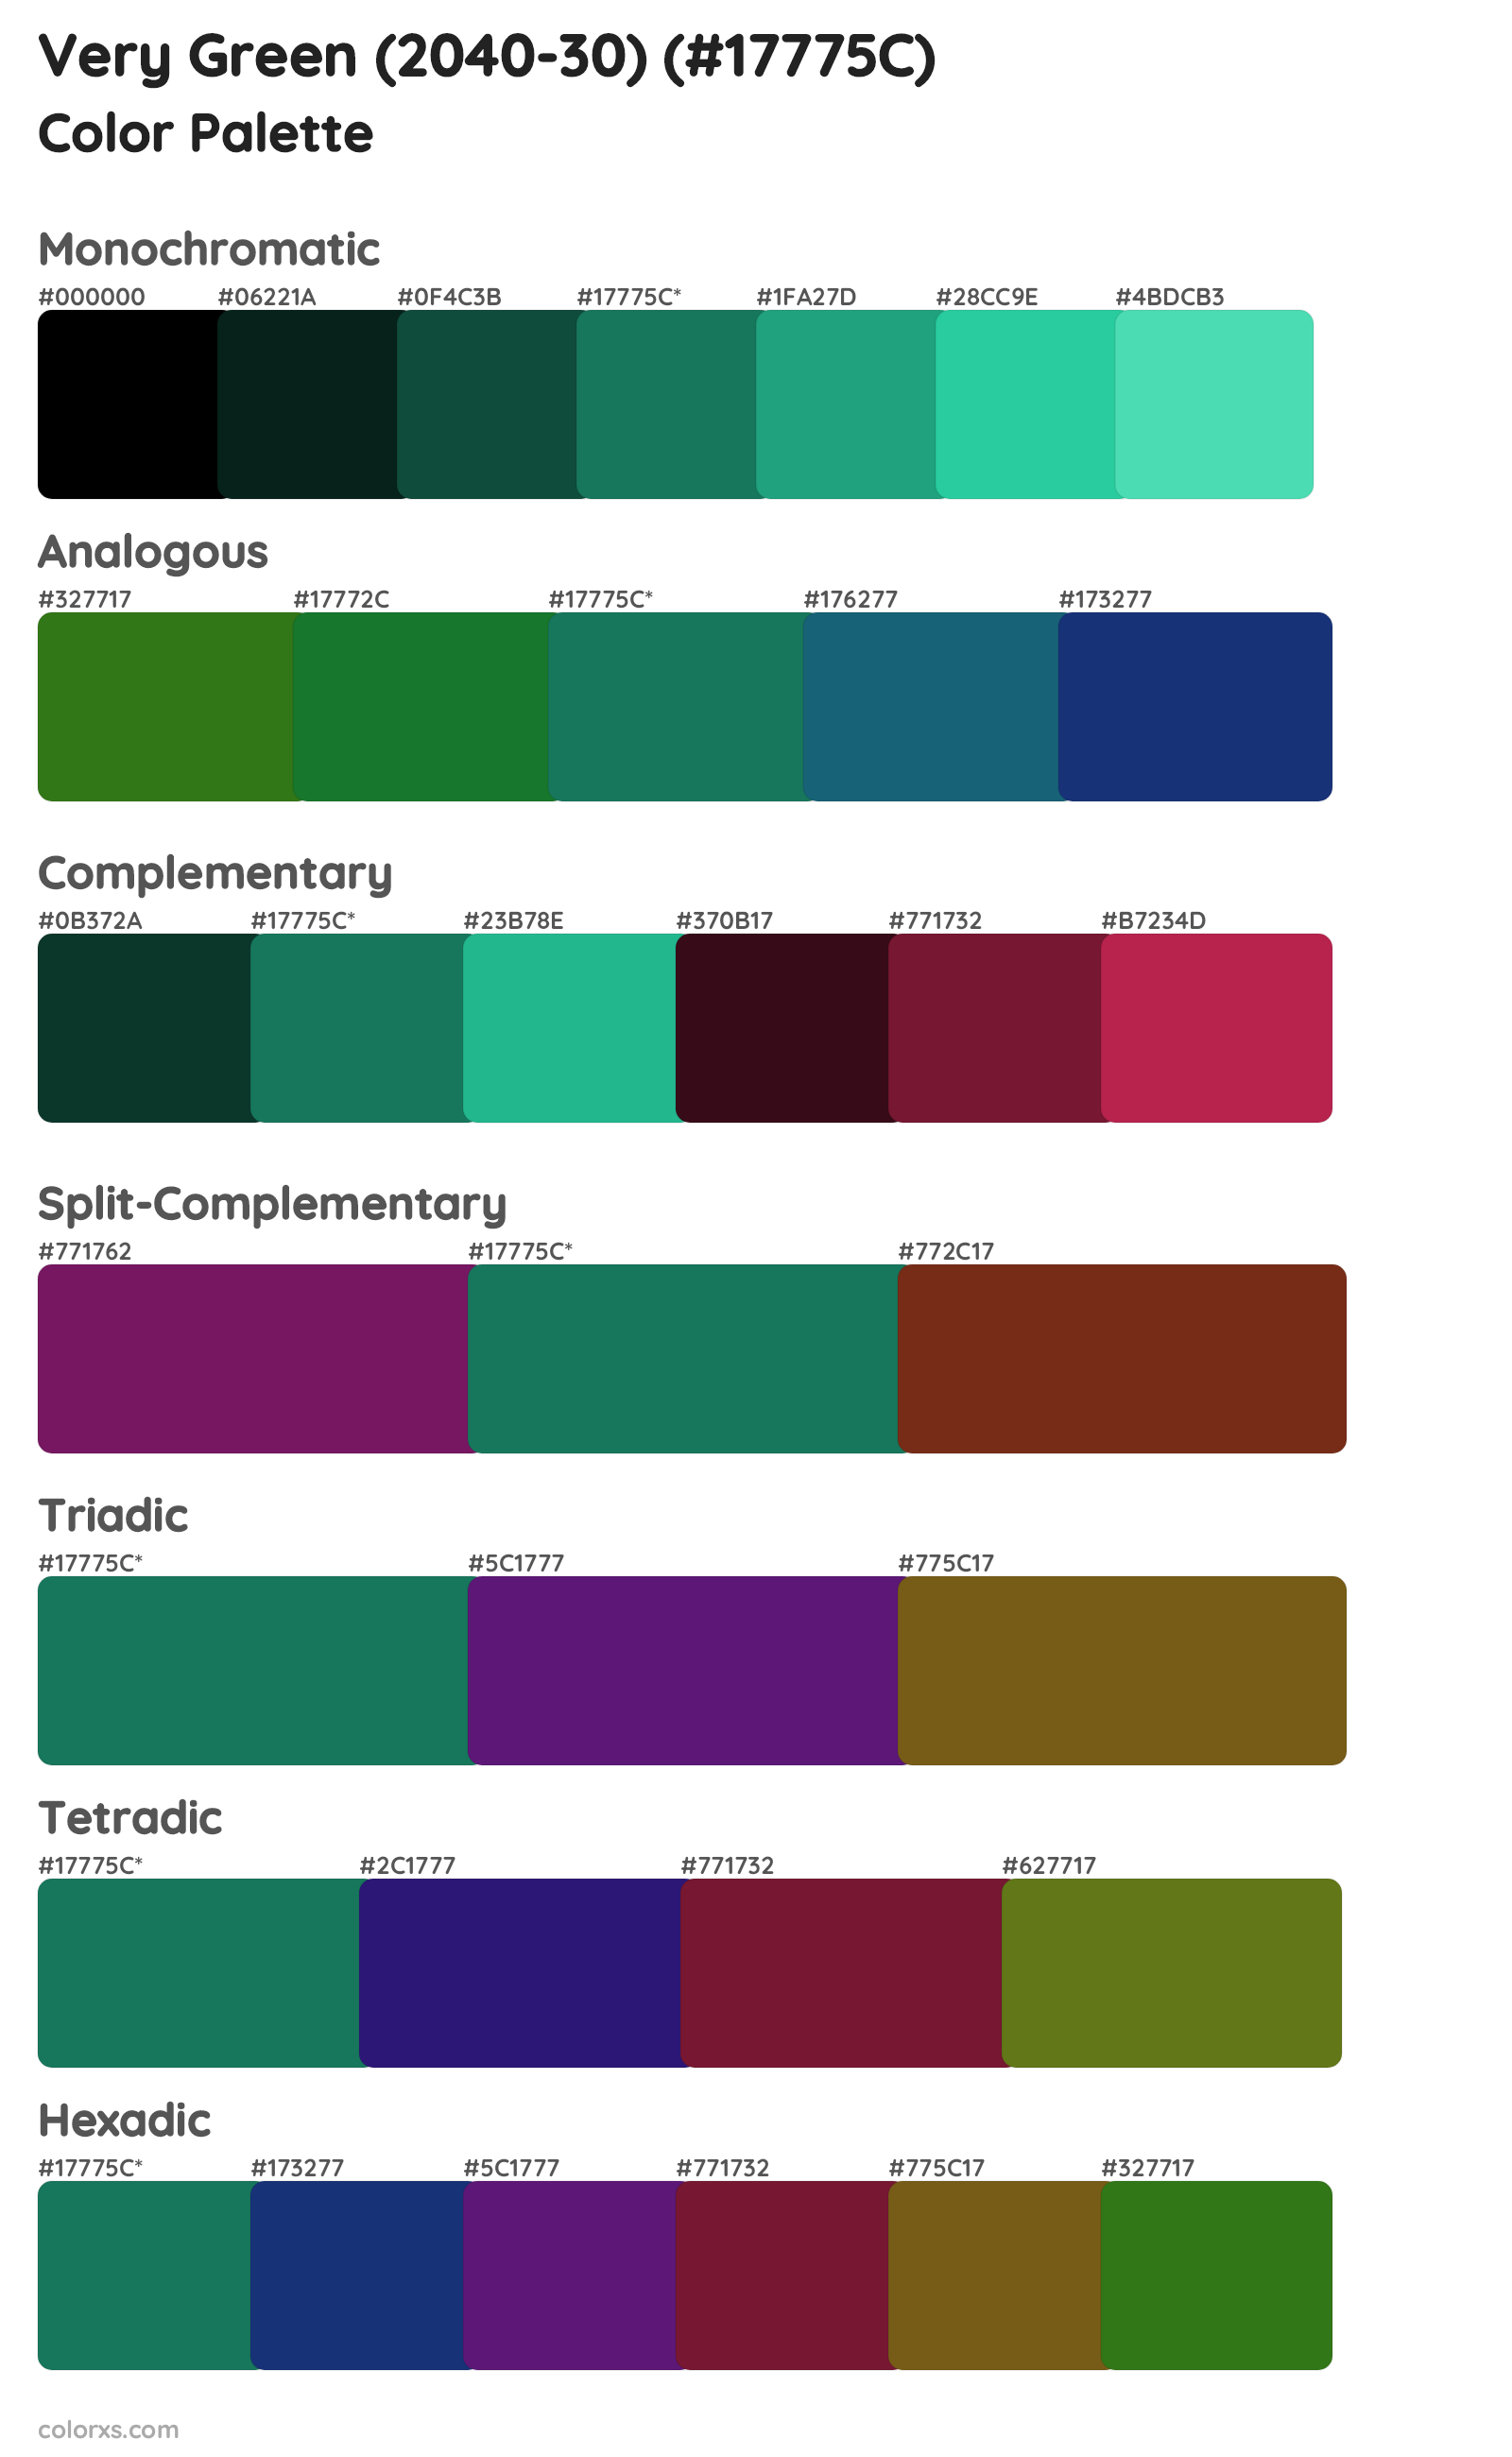 Very Green (2040-30) Color Scheme Palettes